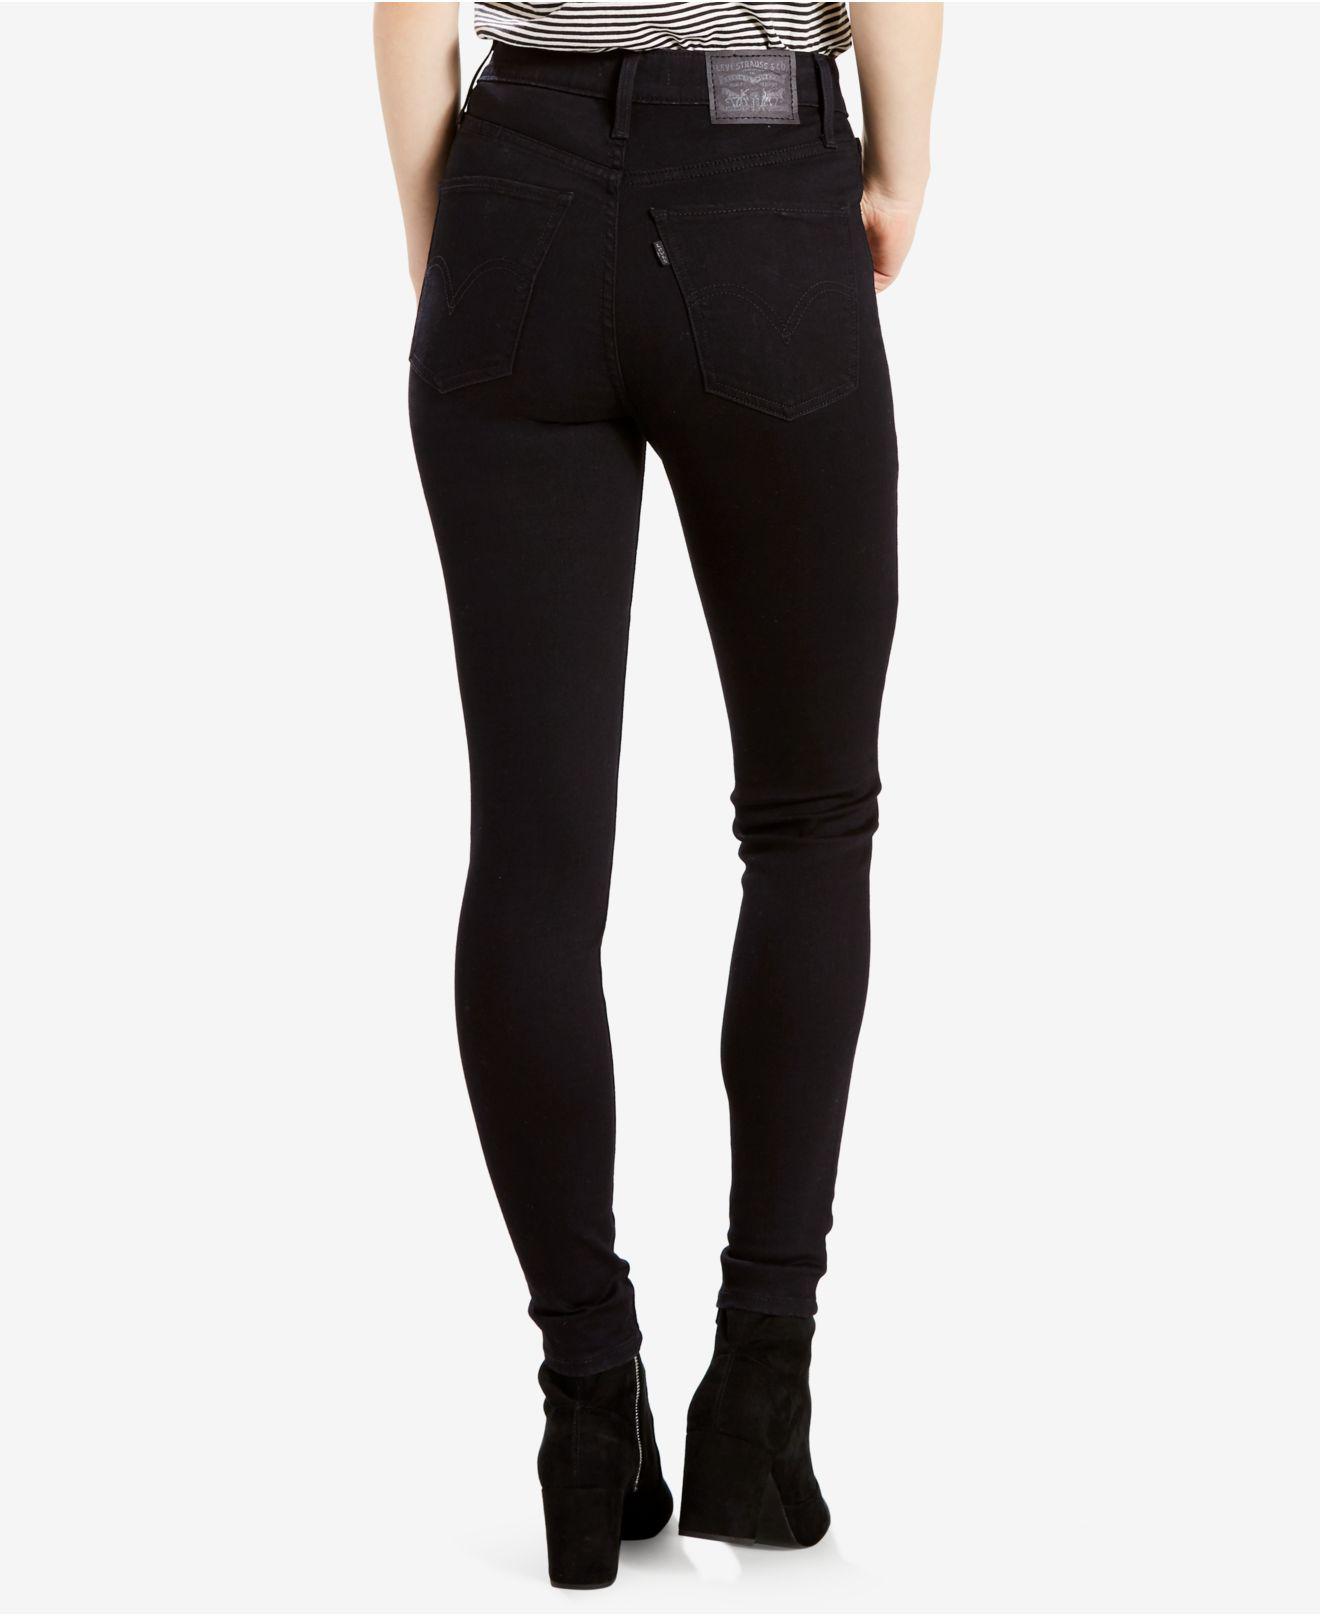 Levi's Denim Mile High Super Skinny Jeans In Black Galaxy - Save 79% - Lyst